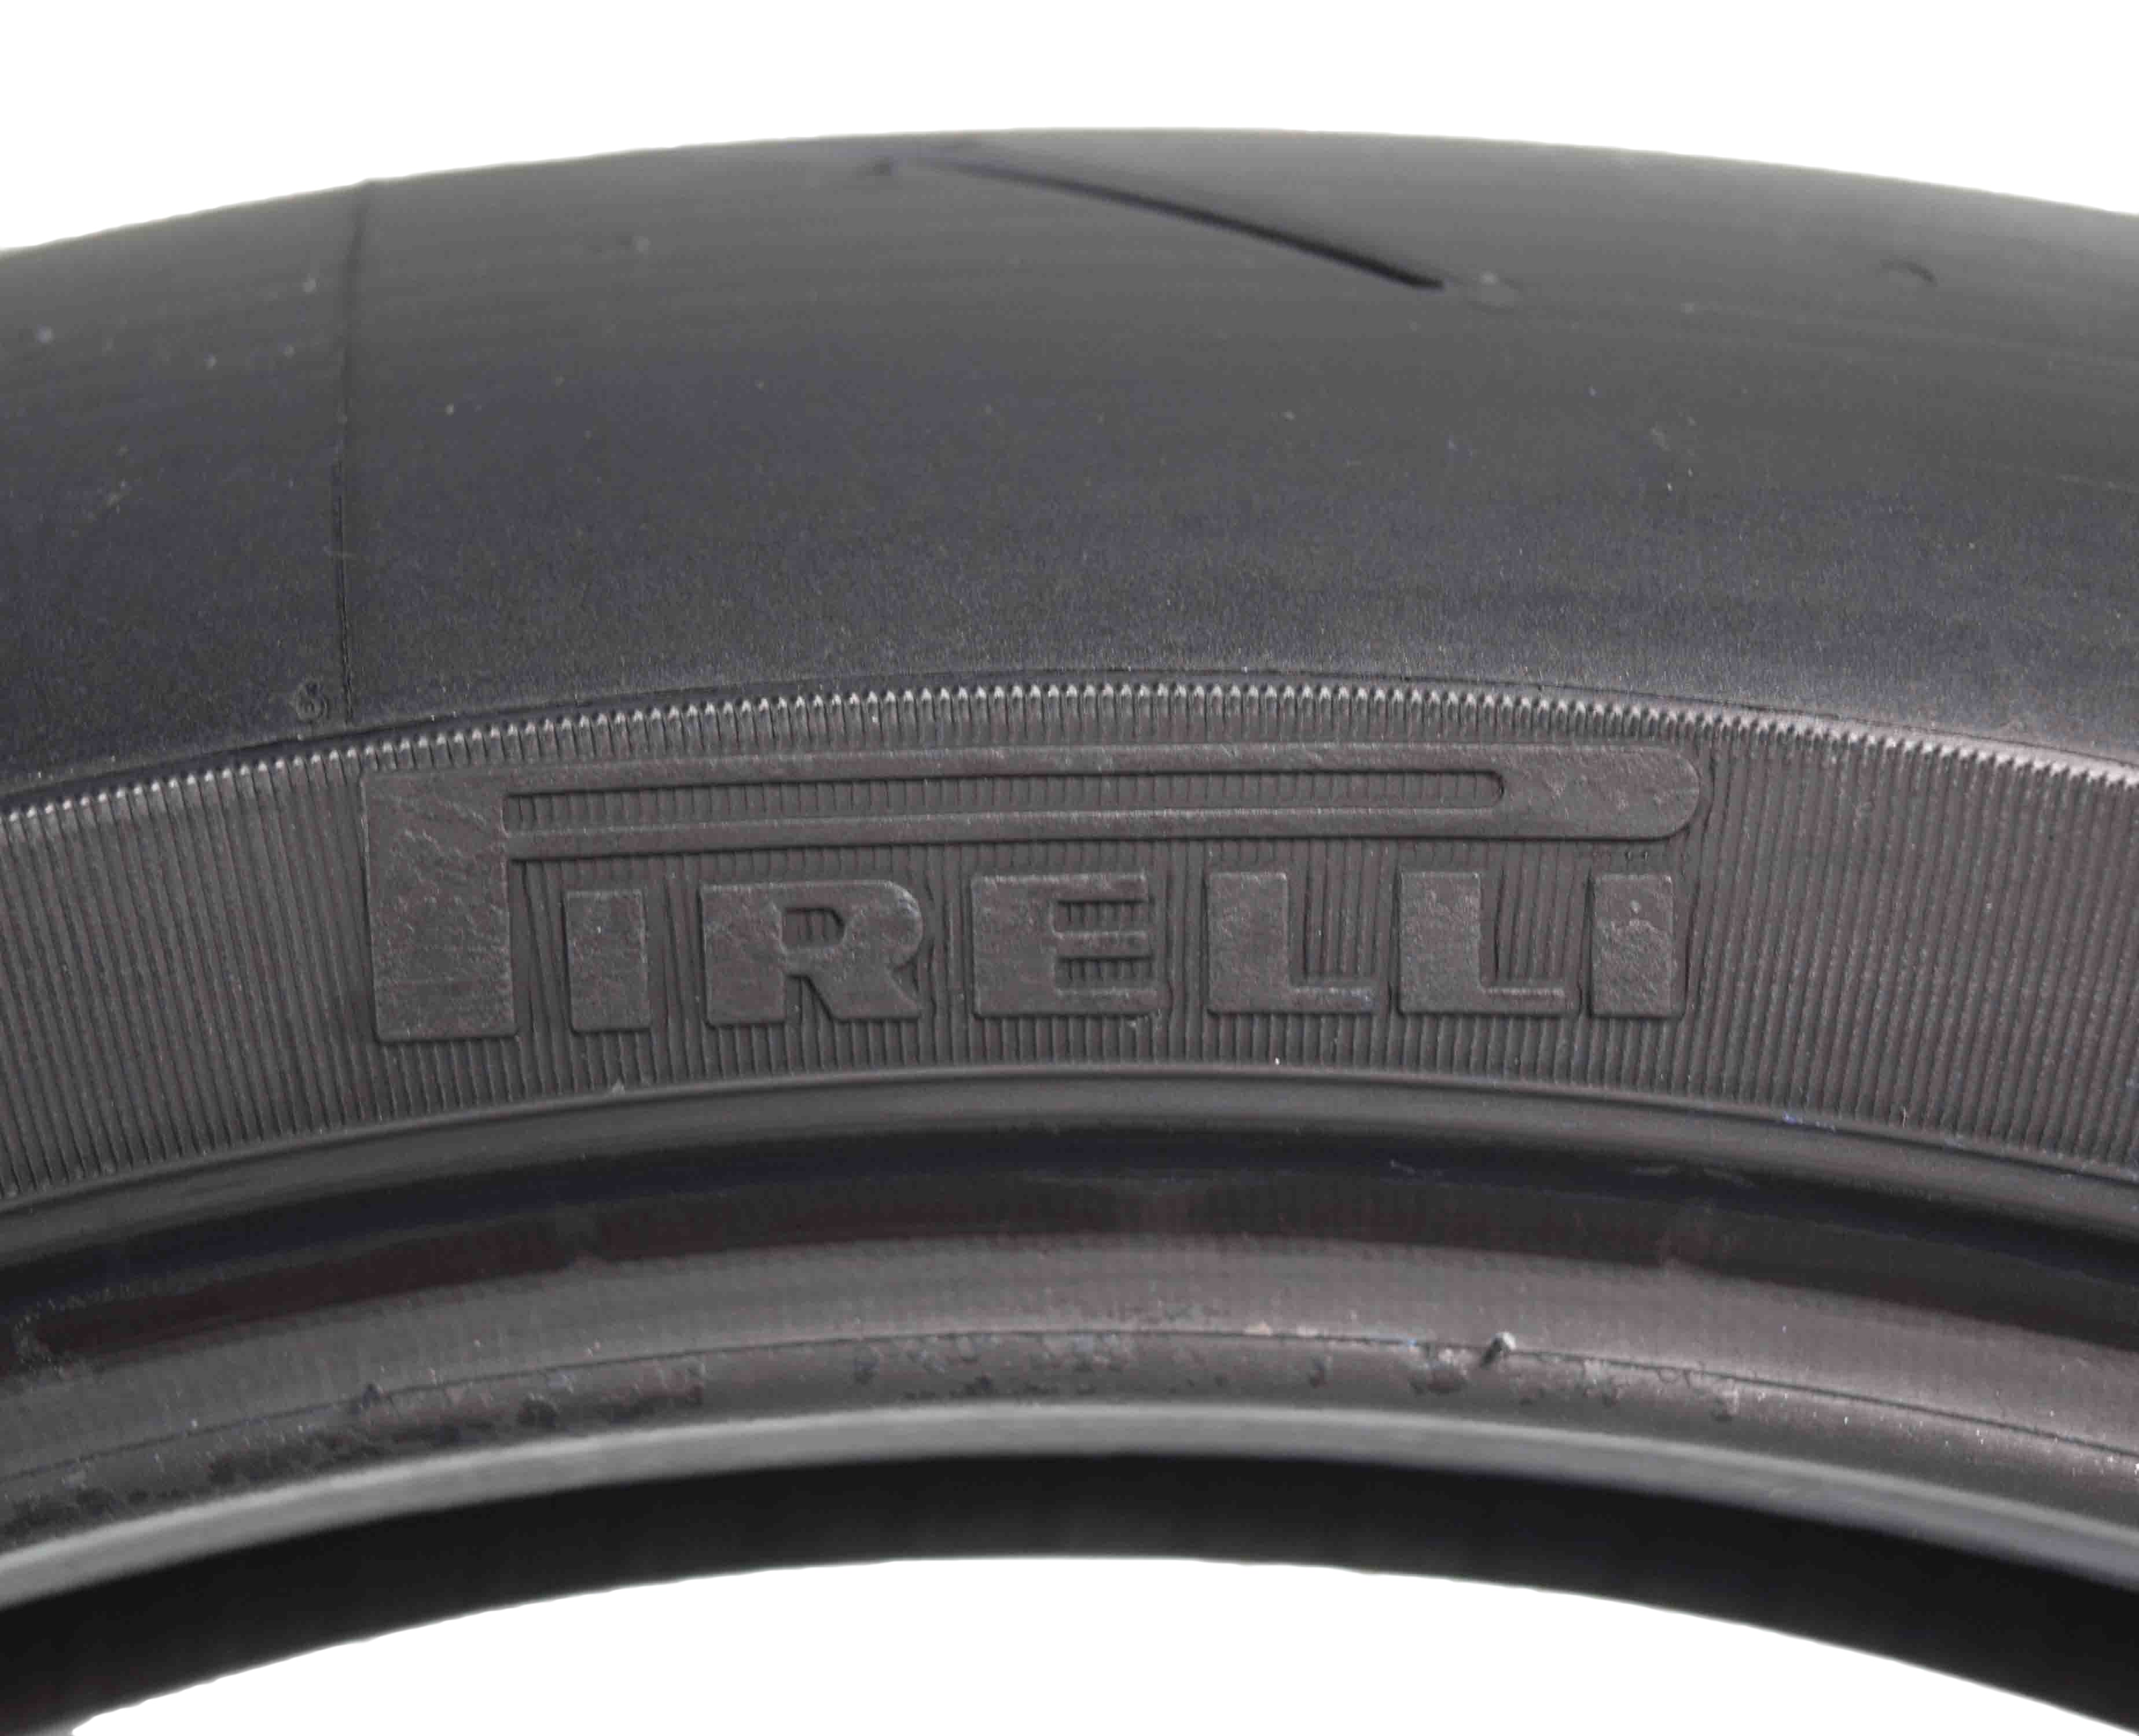 Pirelli Super Corsa V3 Front 120/70ZR17 Rear 200/60ZR17 Motorcycle Tires Set